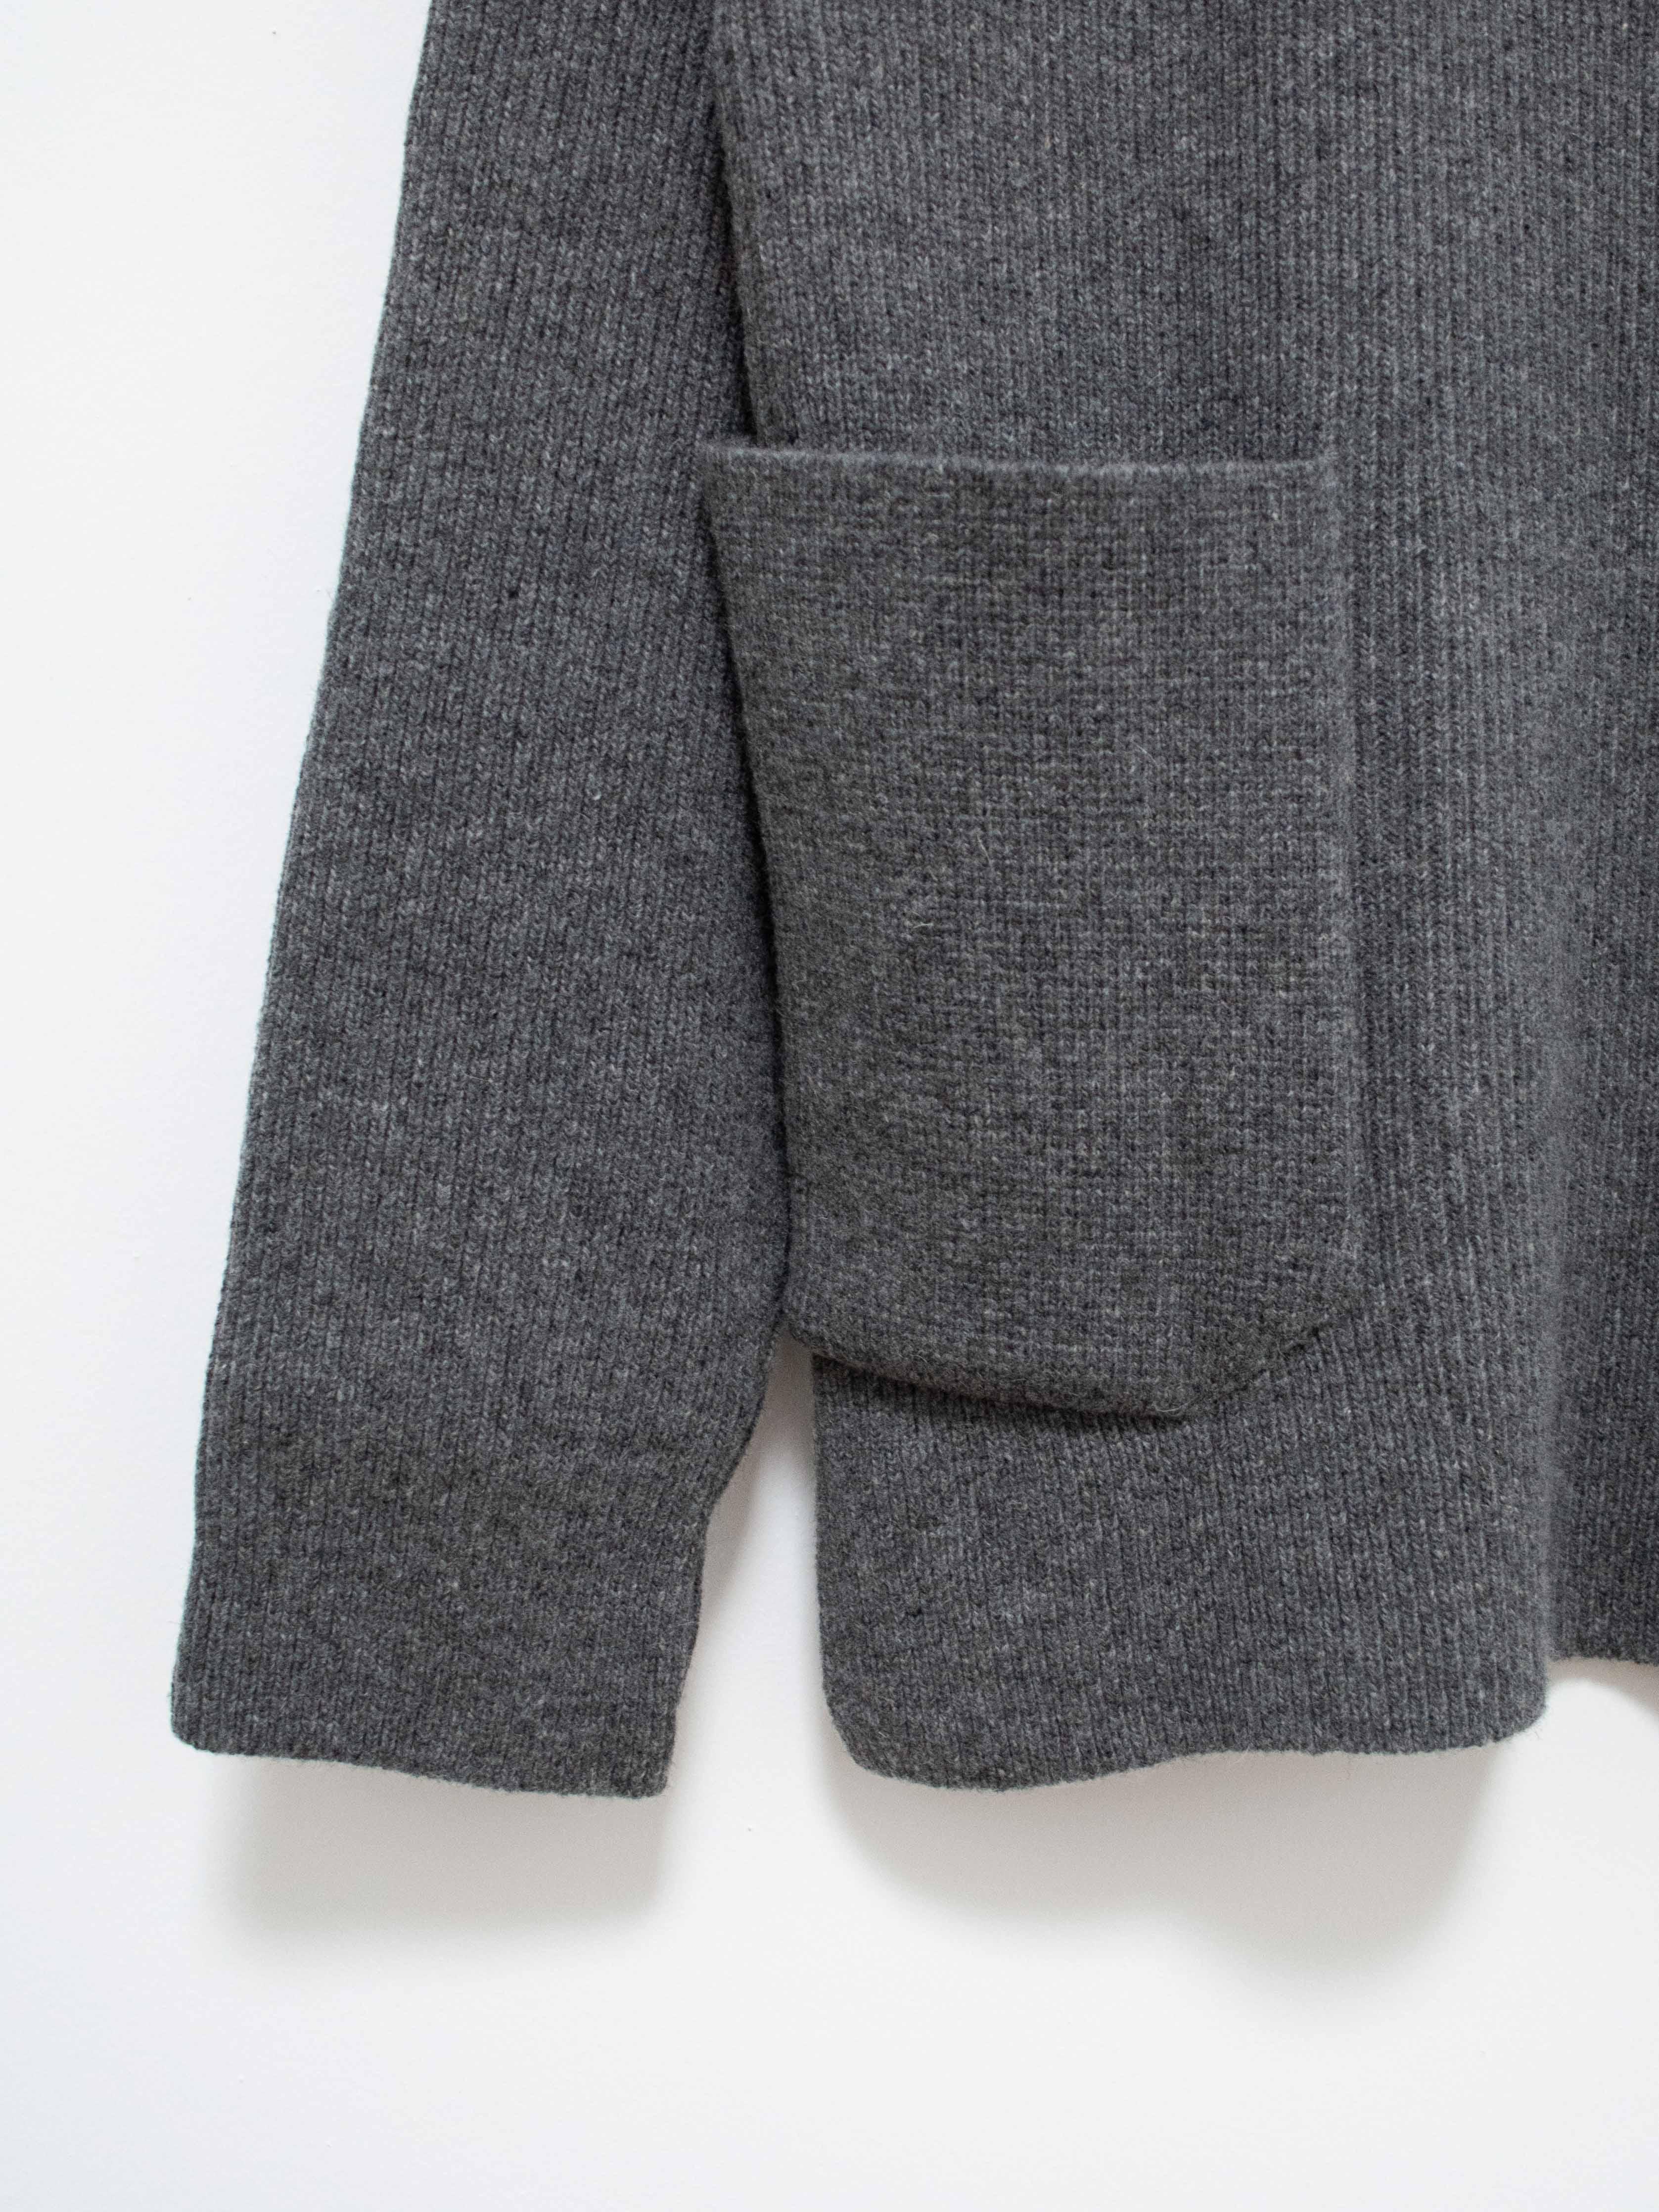 Namu Shop - Document Shirting Jacket Sweater - Gray